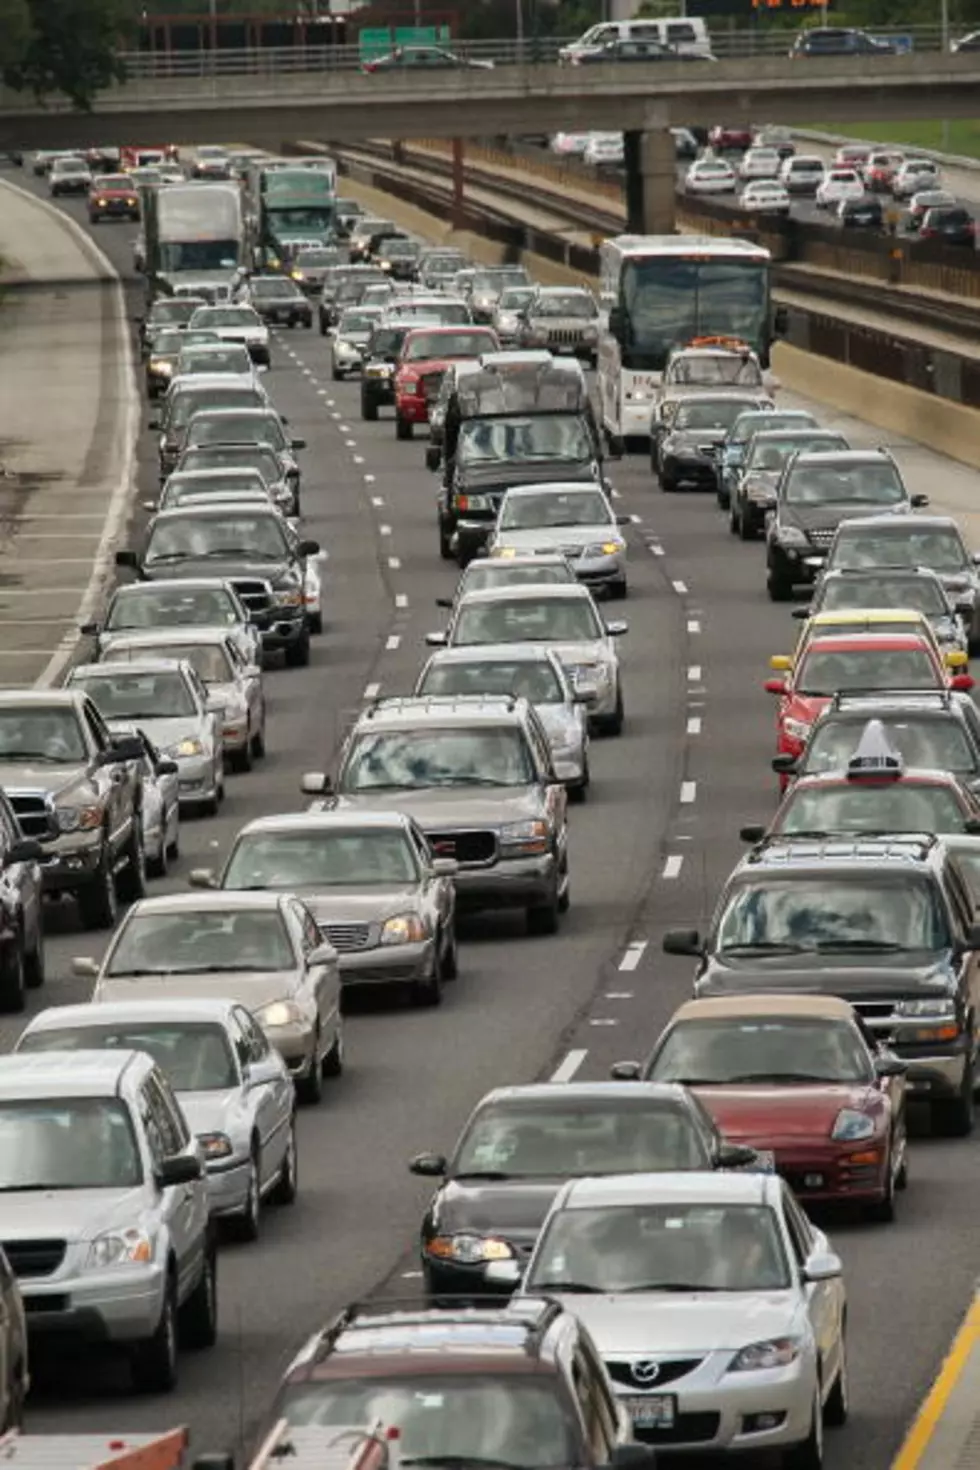 Worst Traffic Spot In Buffalo? [POLL]